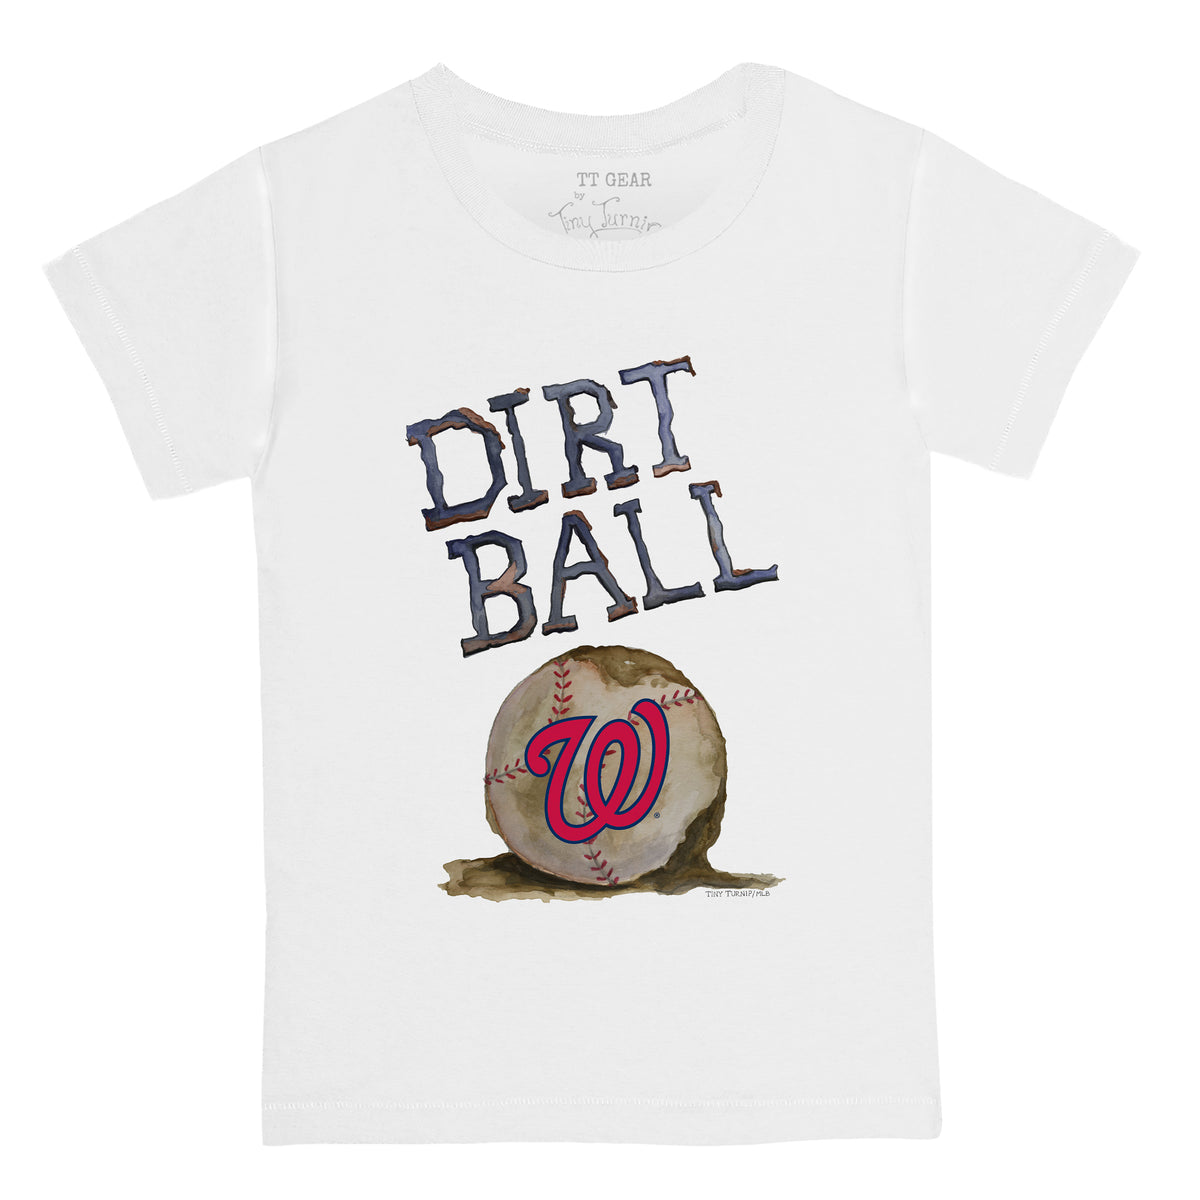 Tiny Turnip St. Louis Cardinals Stitched Baseball Tee Shirt Youth Large (10-12) / White